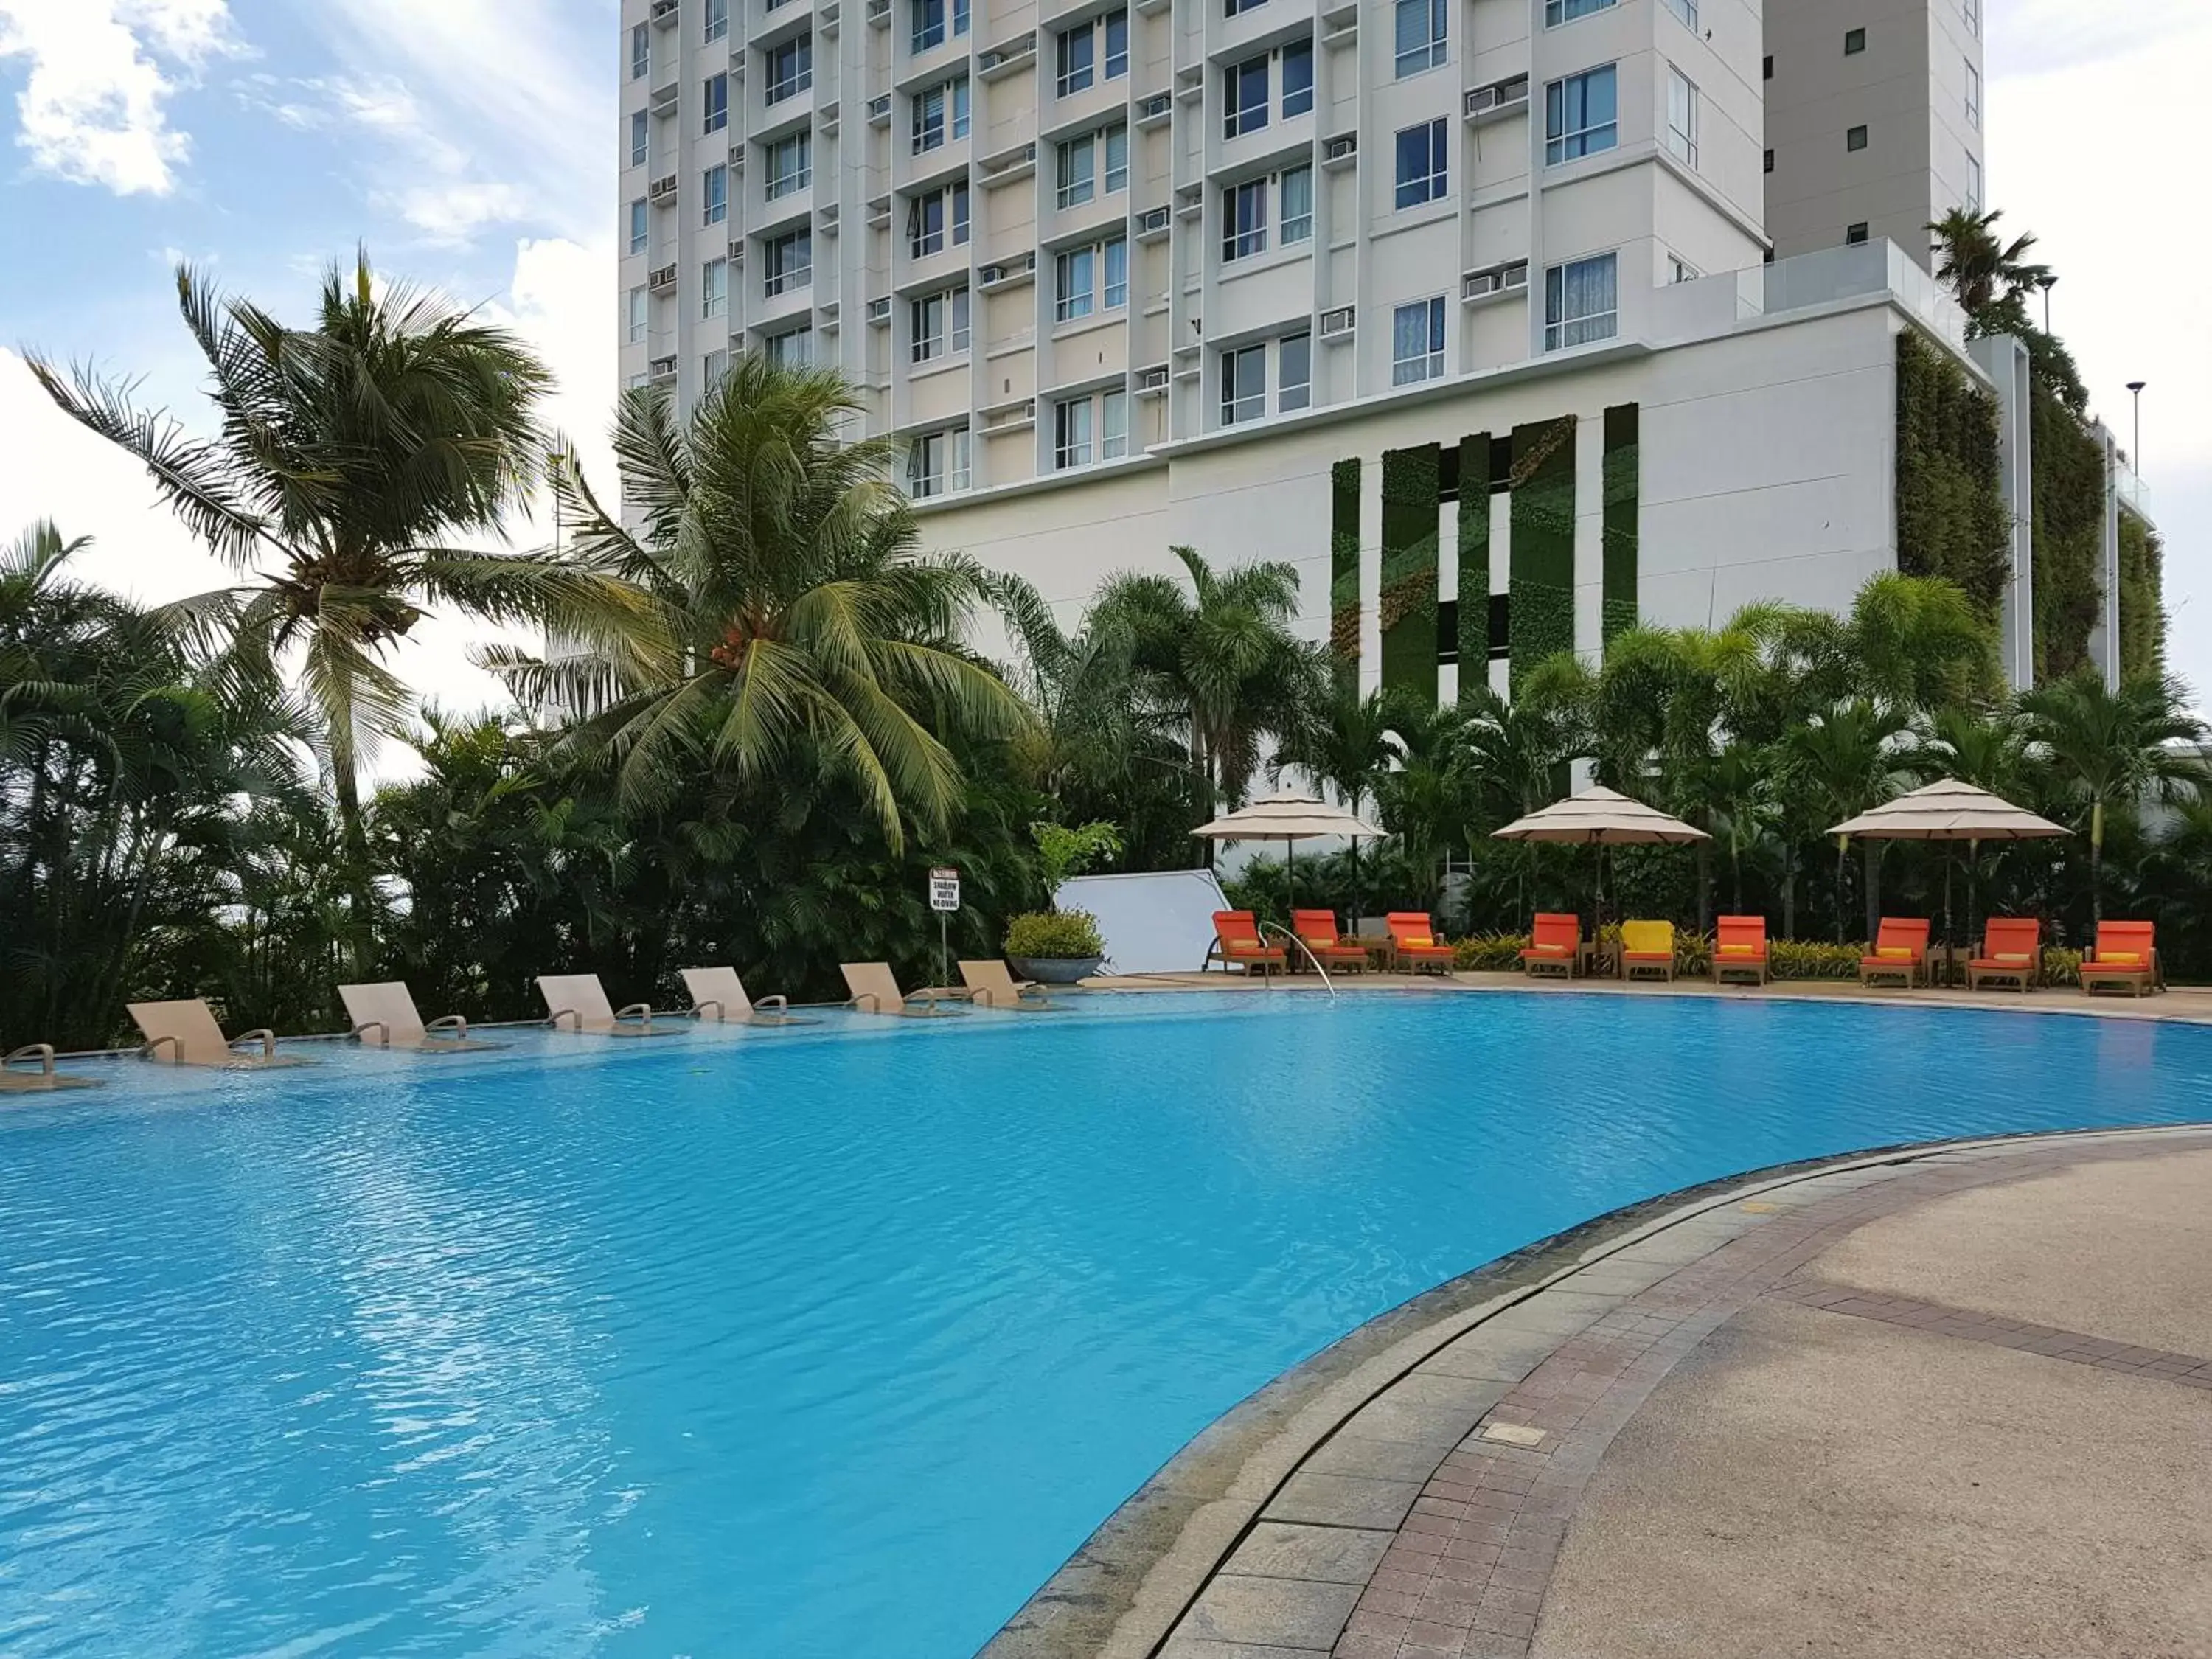 Swimming pool in Marco Polo Plaza Cebu